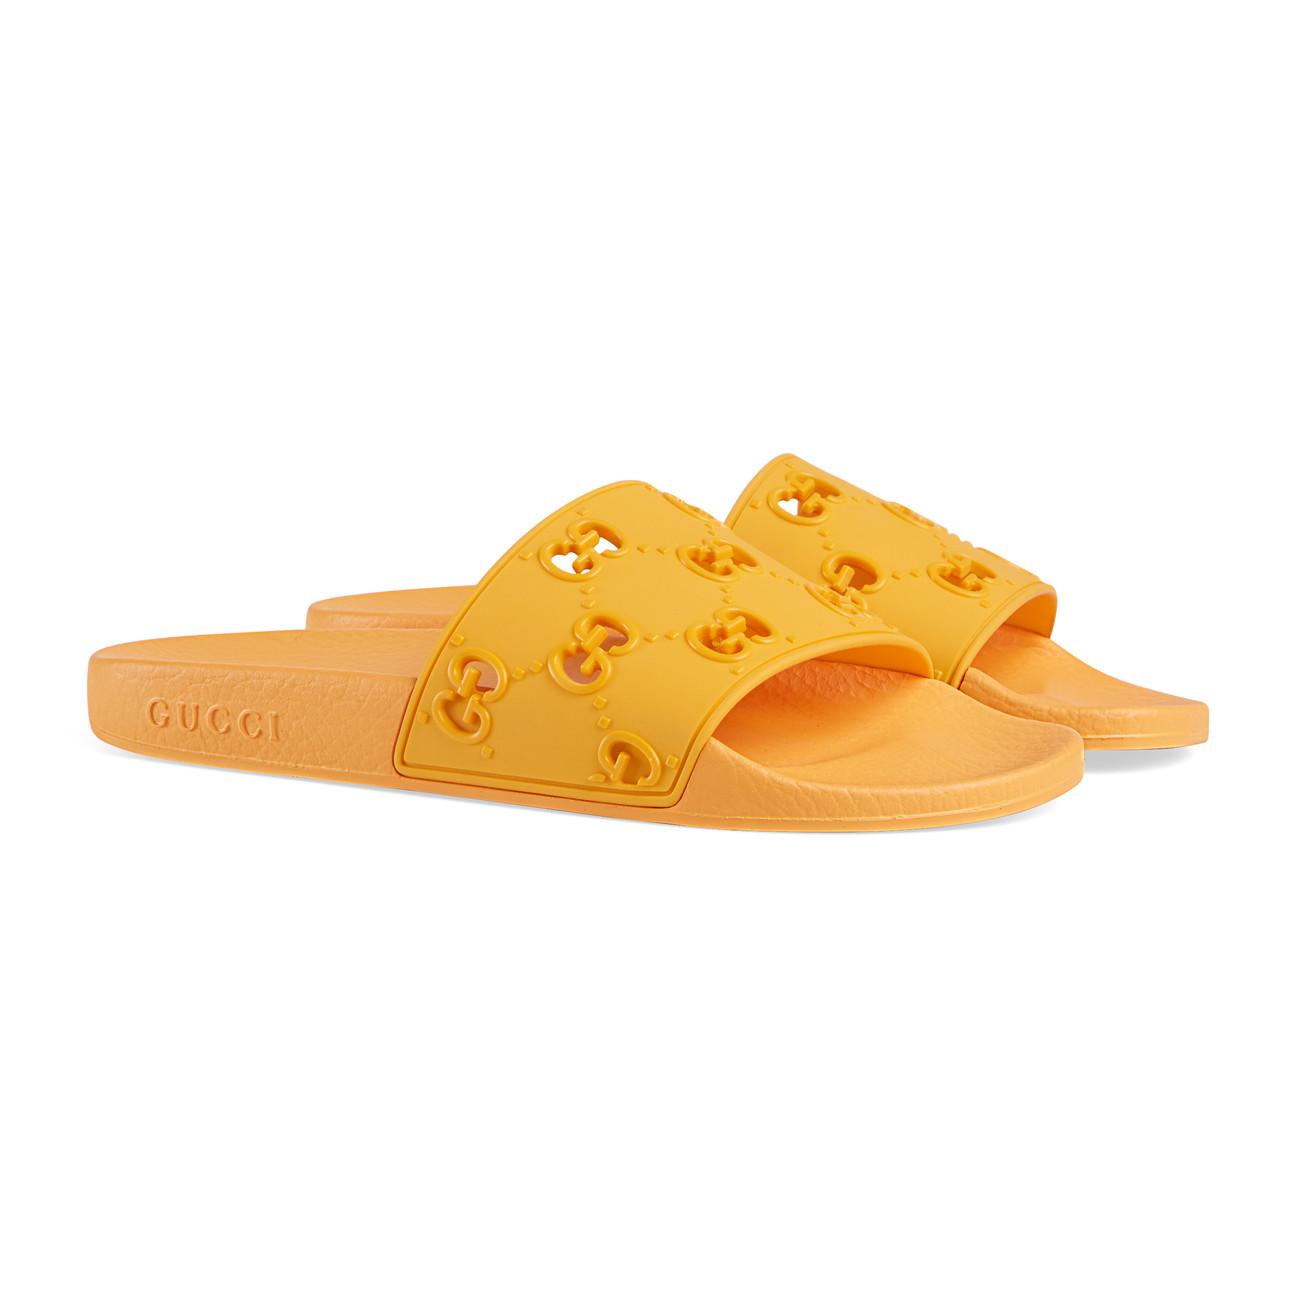 yellow gucci flip flops, OFF 71%,www 